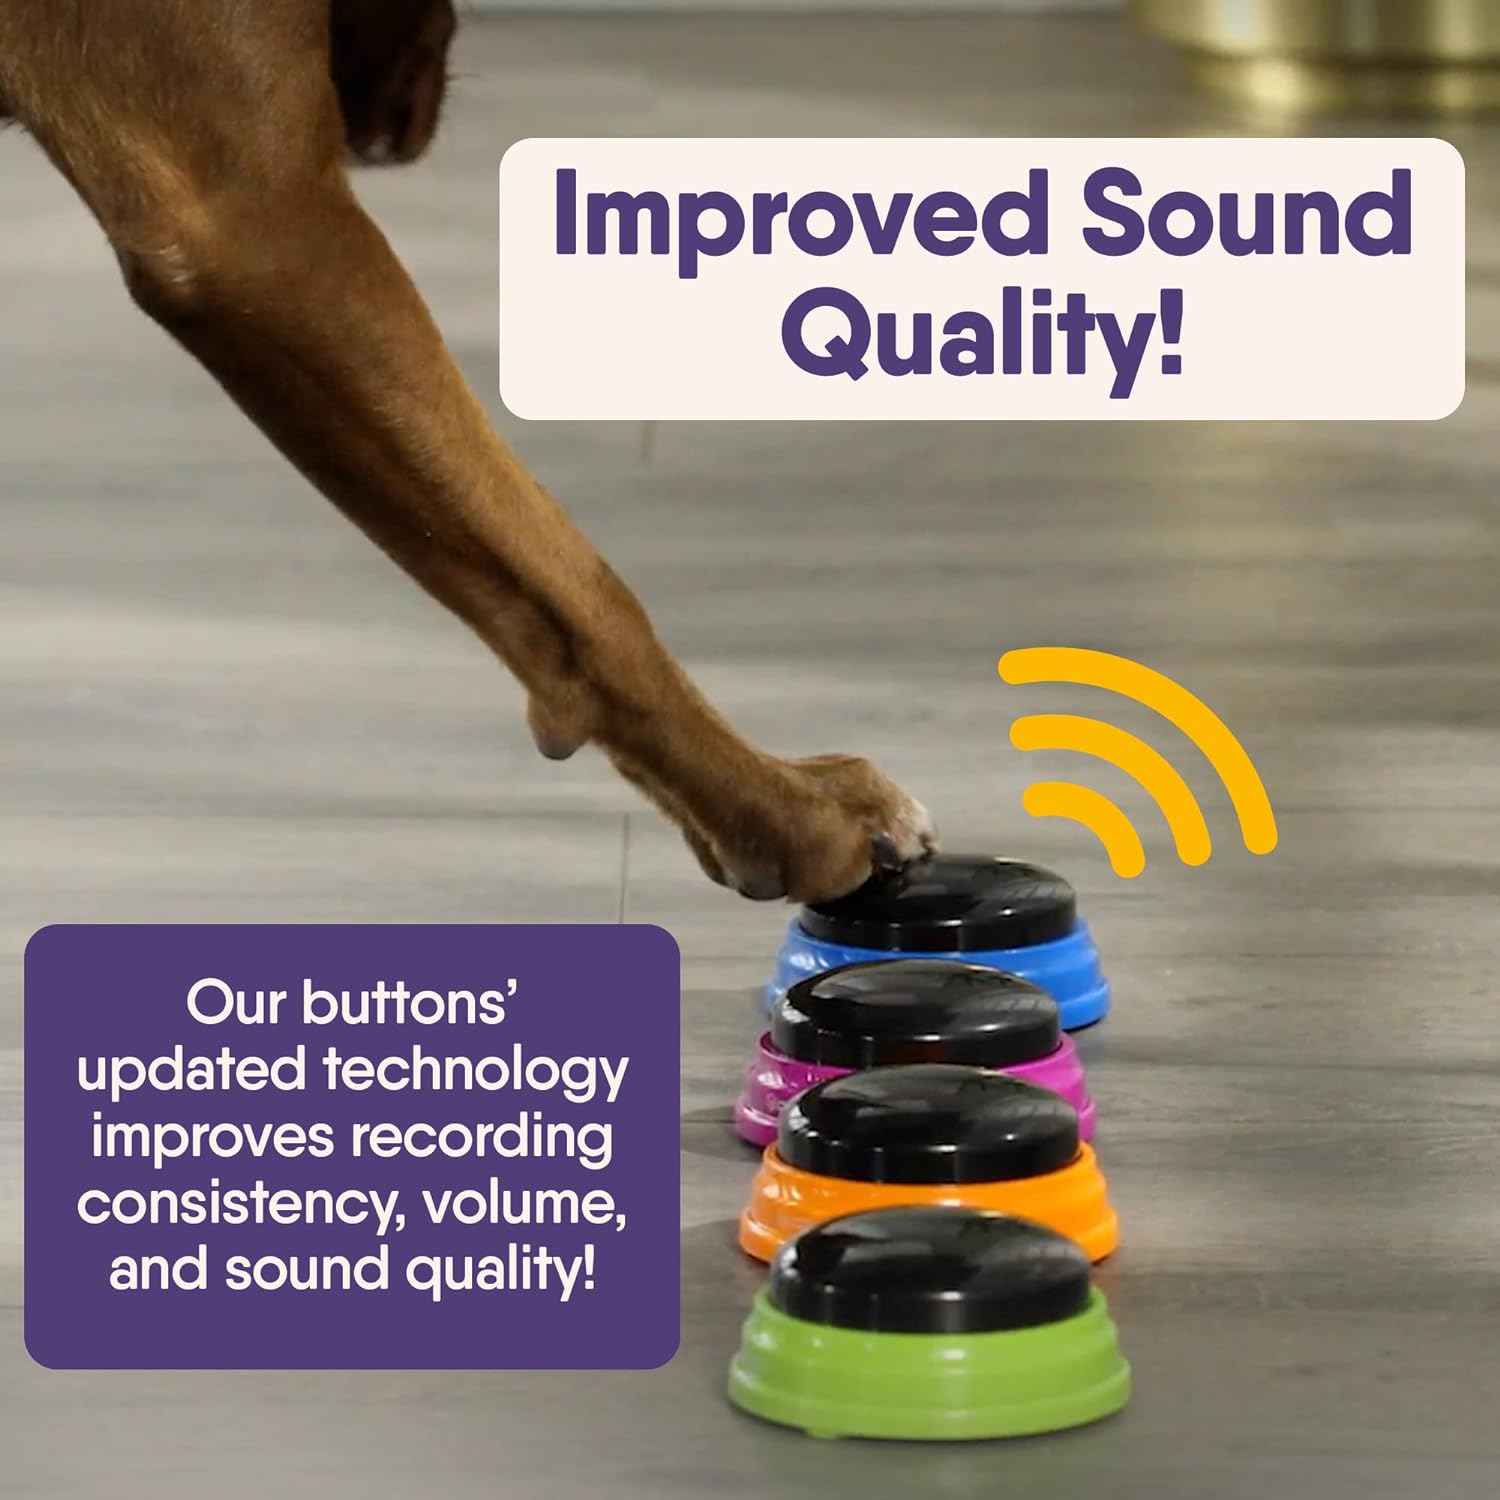 Hunger for Words Talking Pet Starter Set - 4 Recordable Buttons for Dog Communication